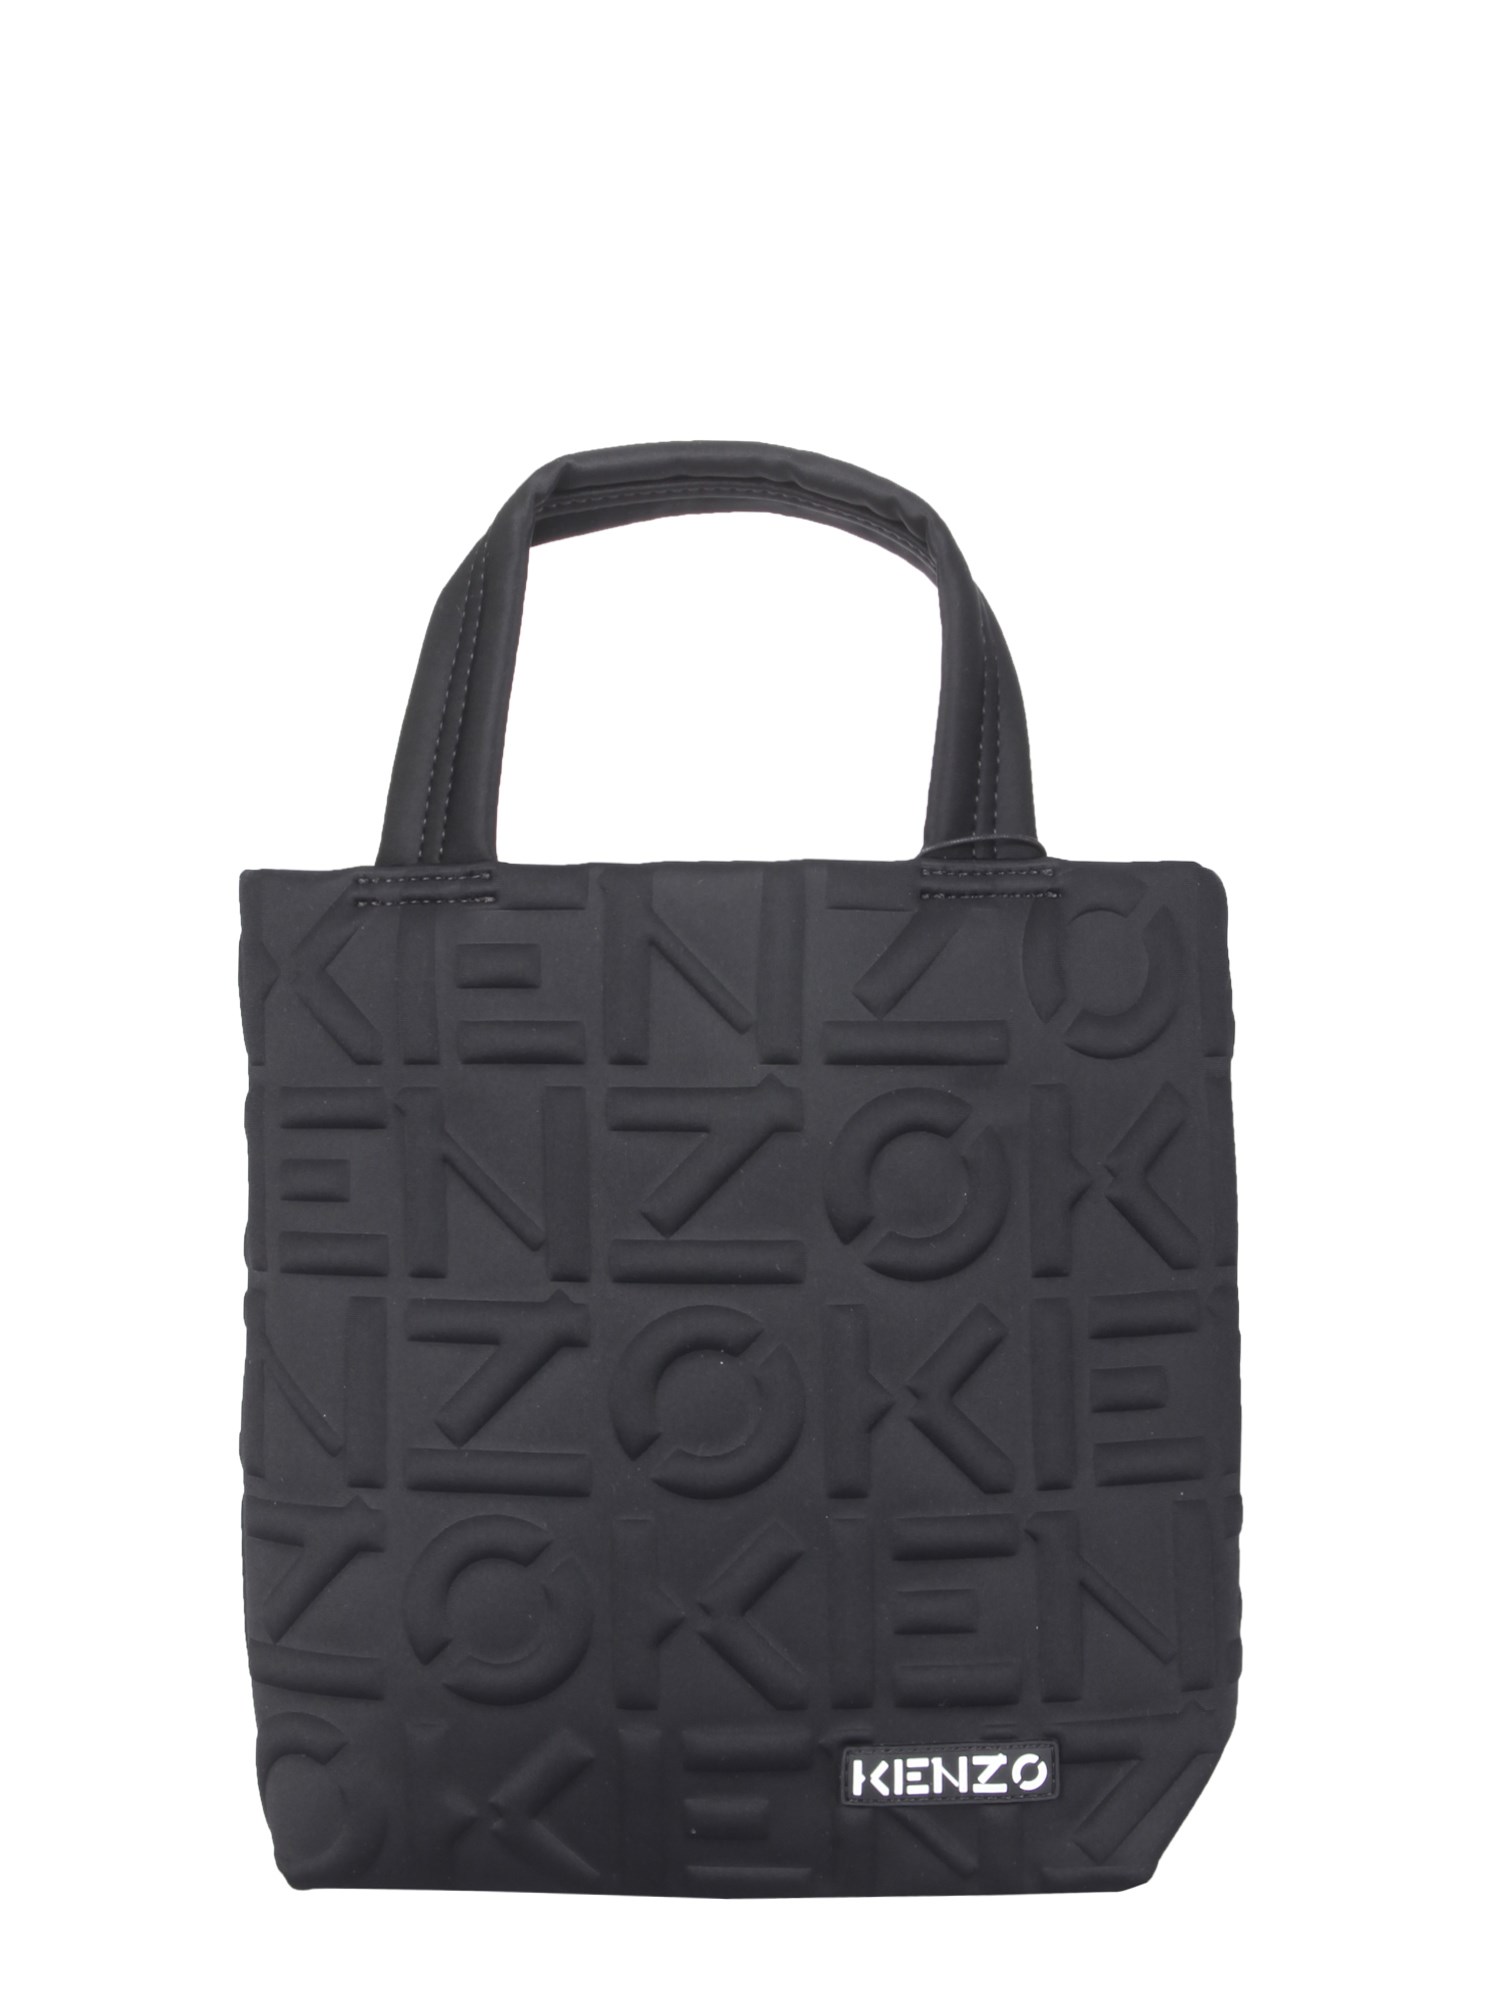 kenzo small tote bag with monogram logo